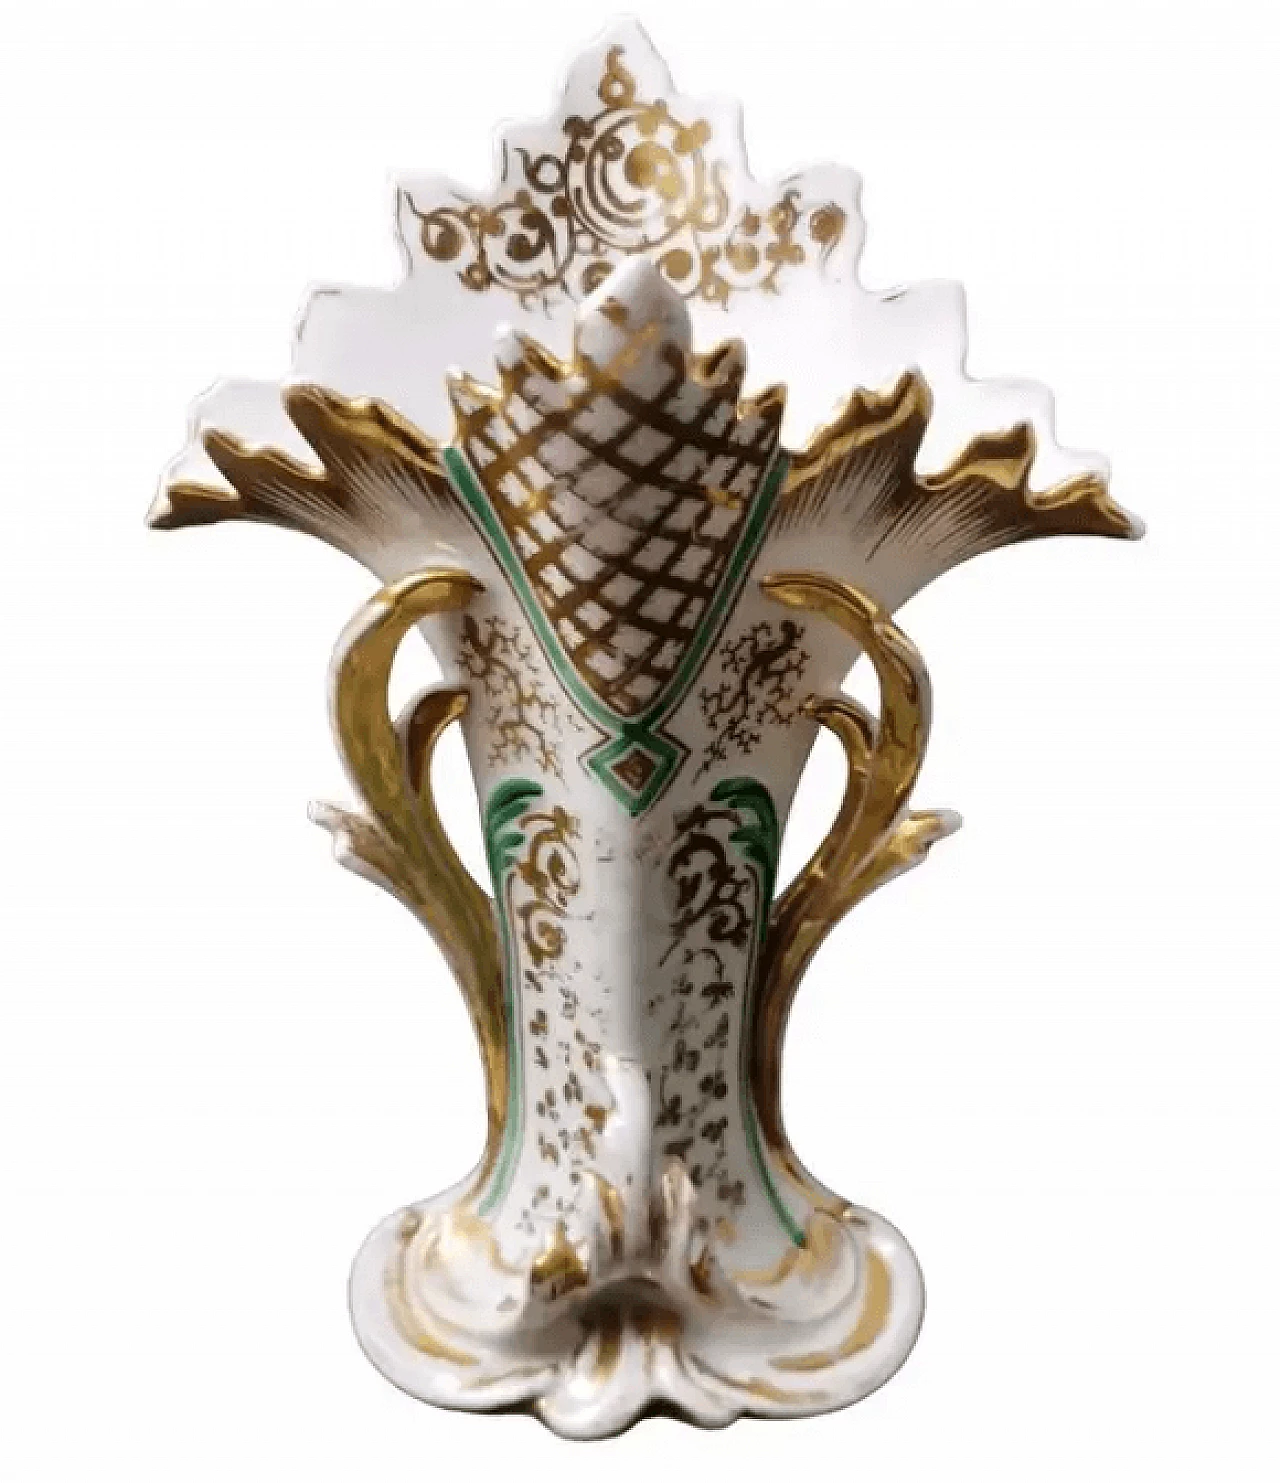 French wedding vase in De Paris porcelain, late 19th century 1